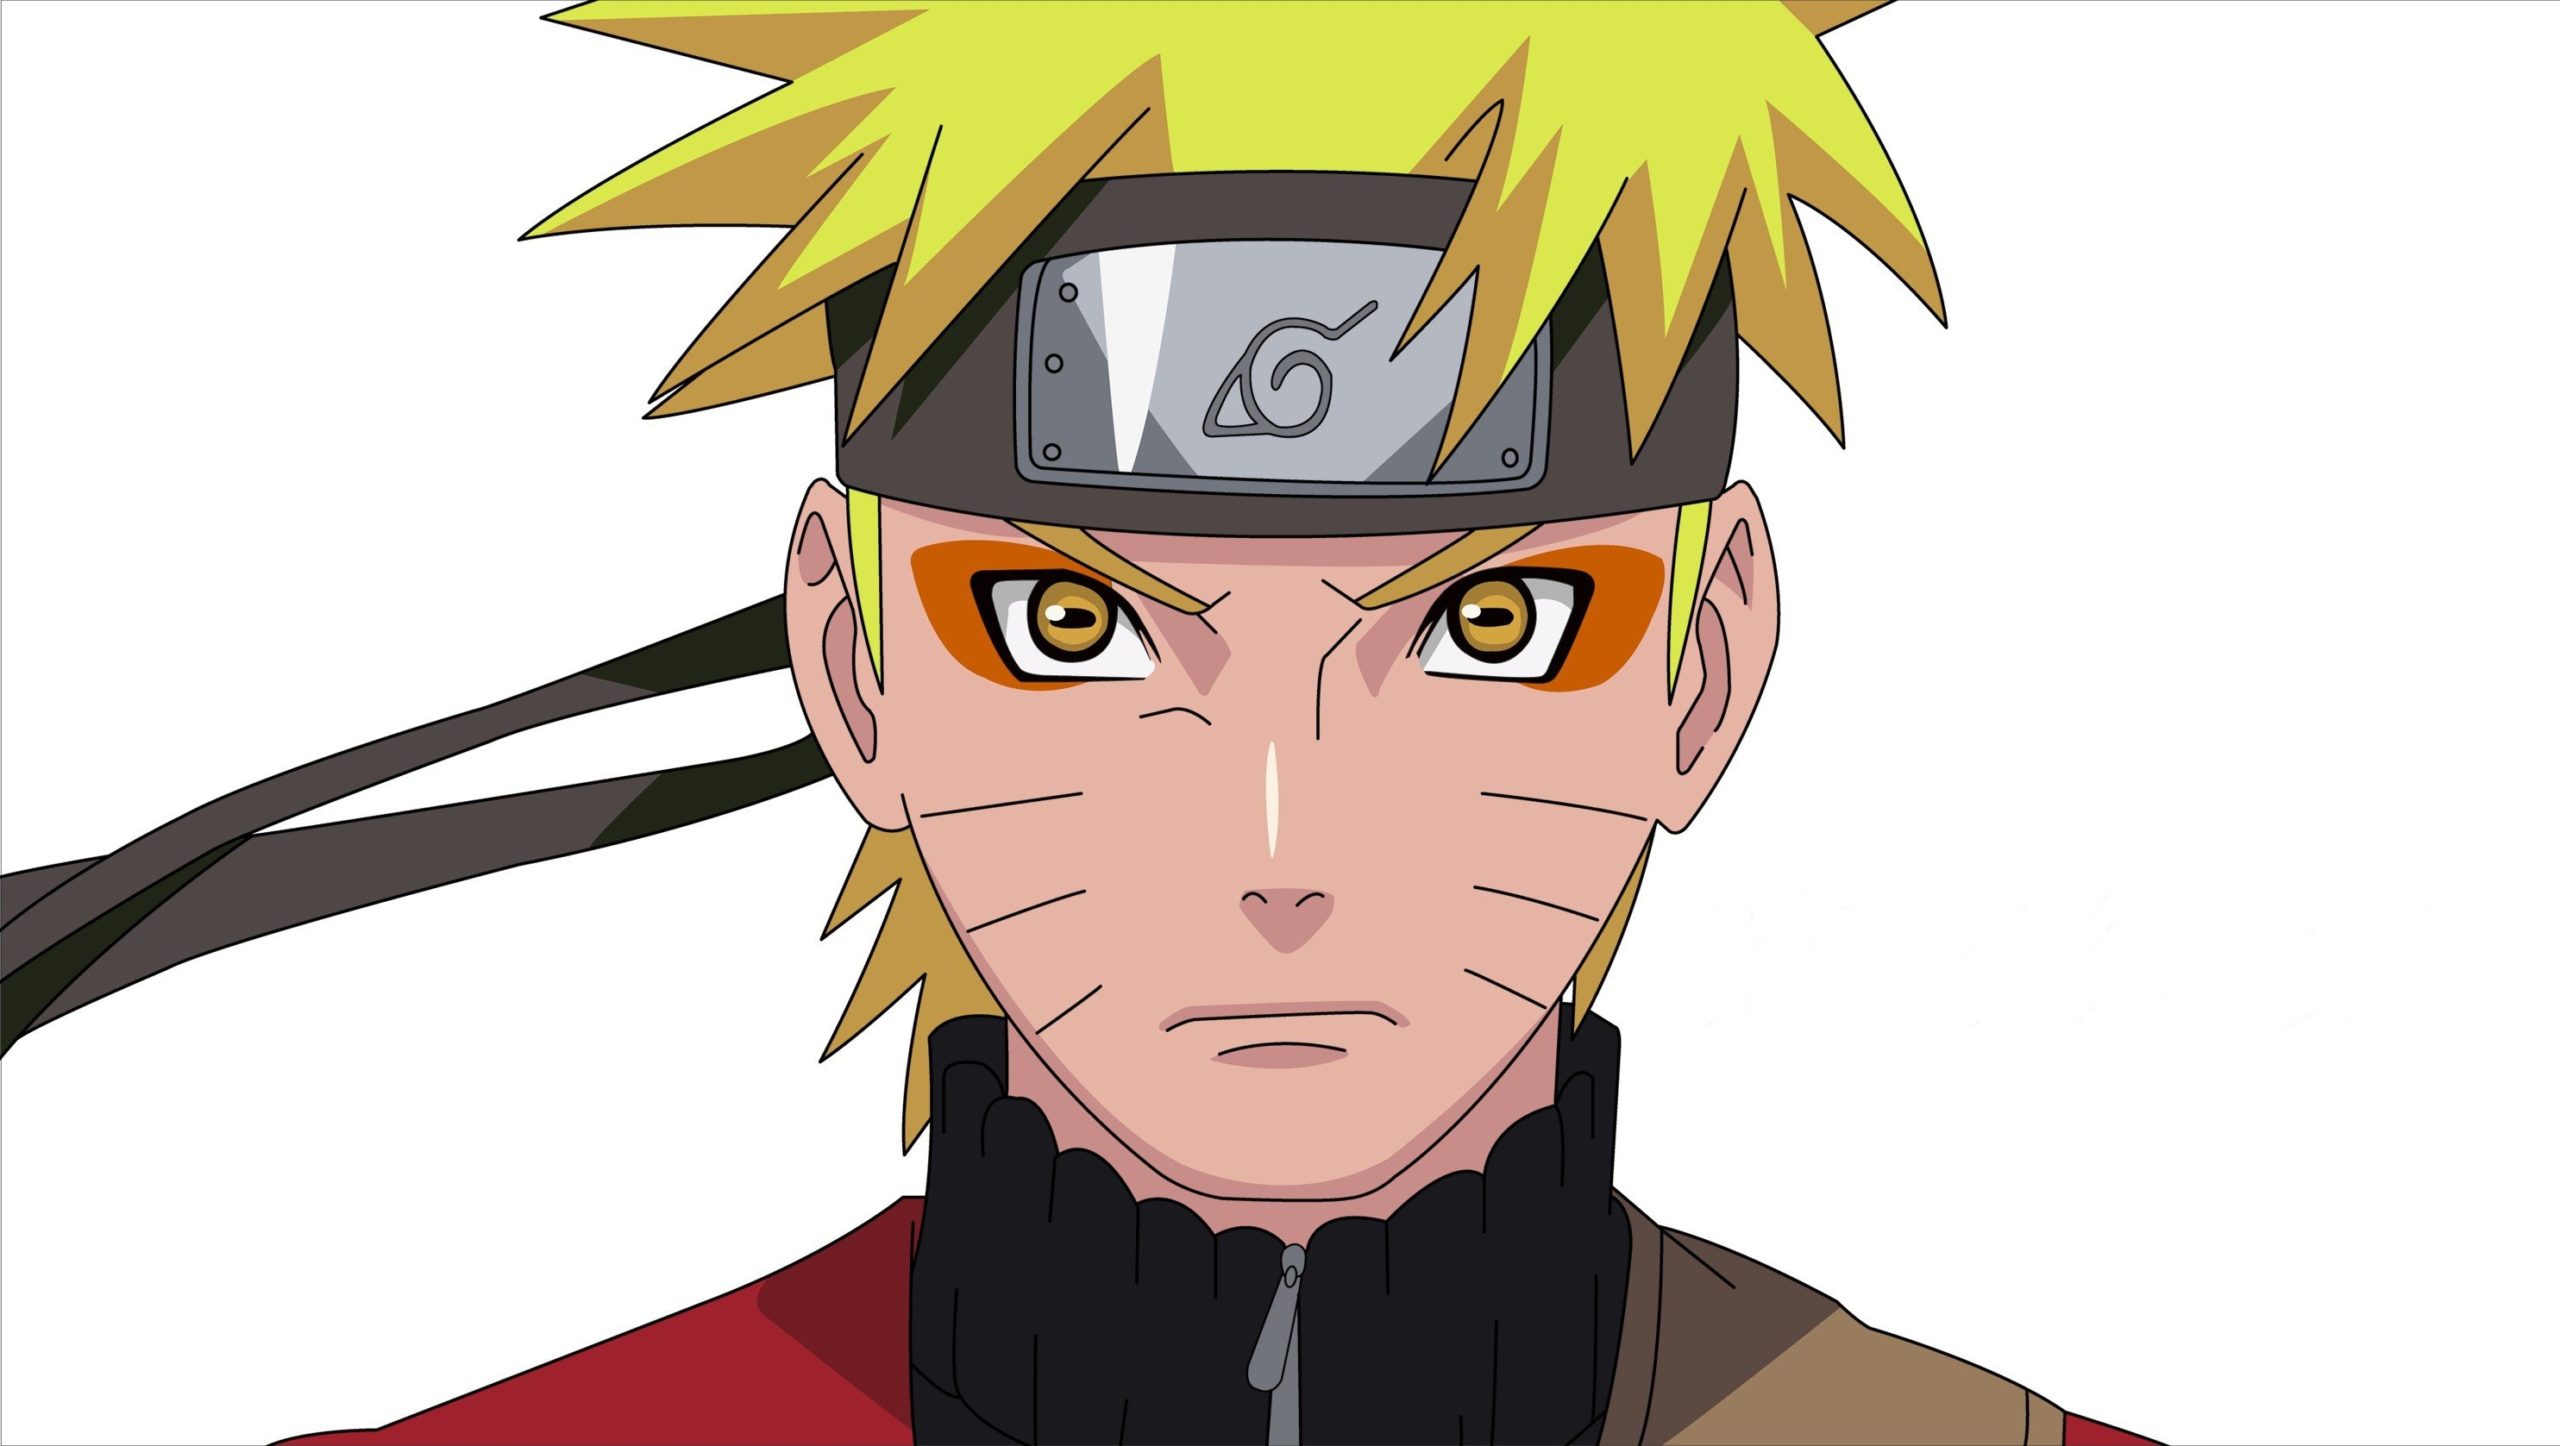 Naruto Classico Ep 1 Parte 4 Naruto Uzumaki é um menino que vive